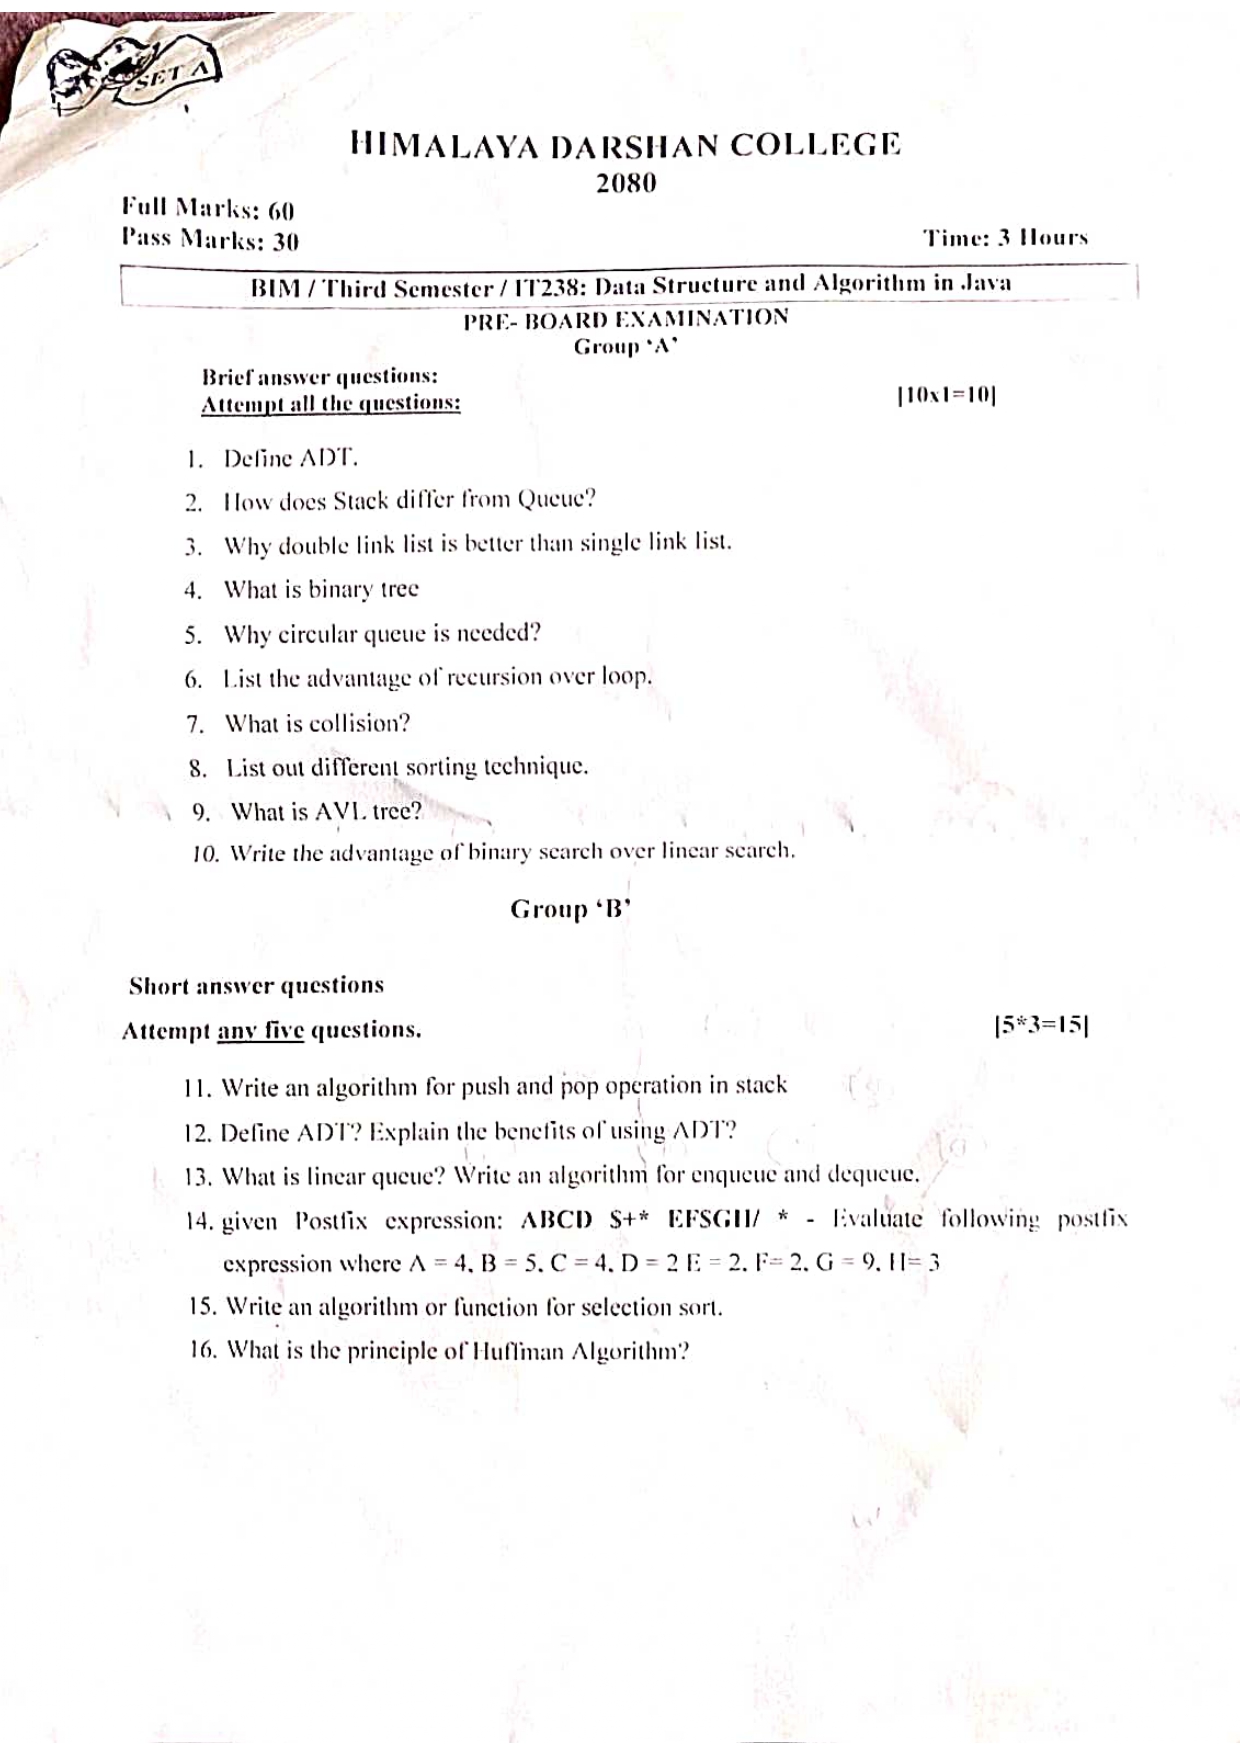 HDC BIM 3rd Sem Question set_page-0017